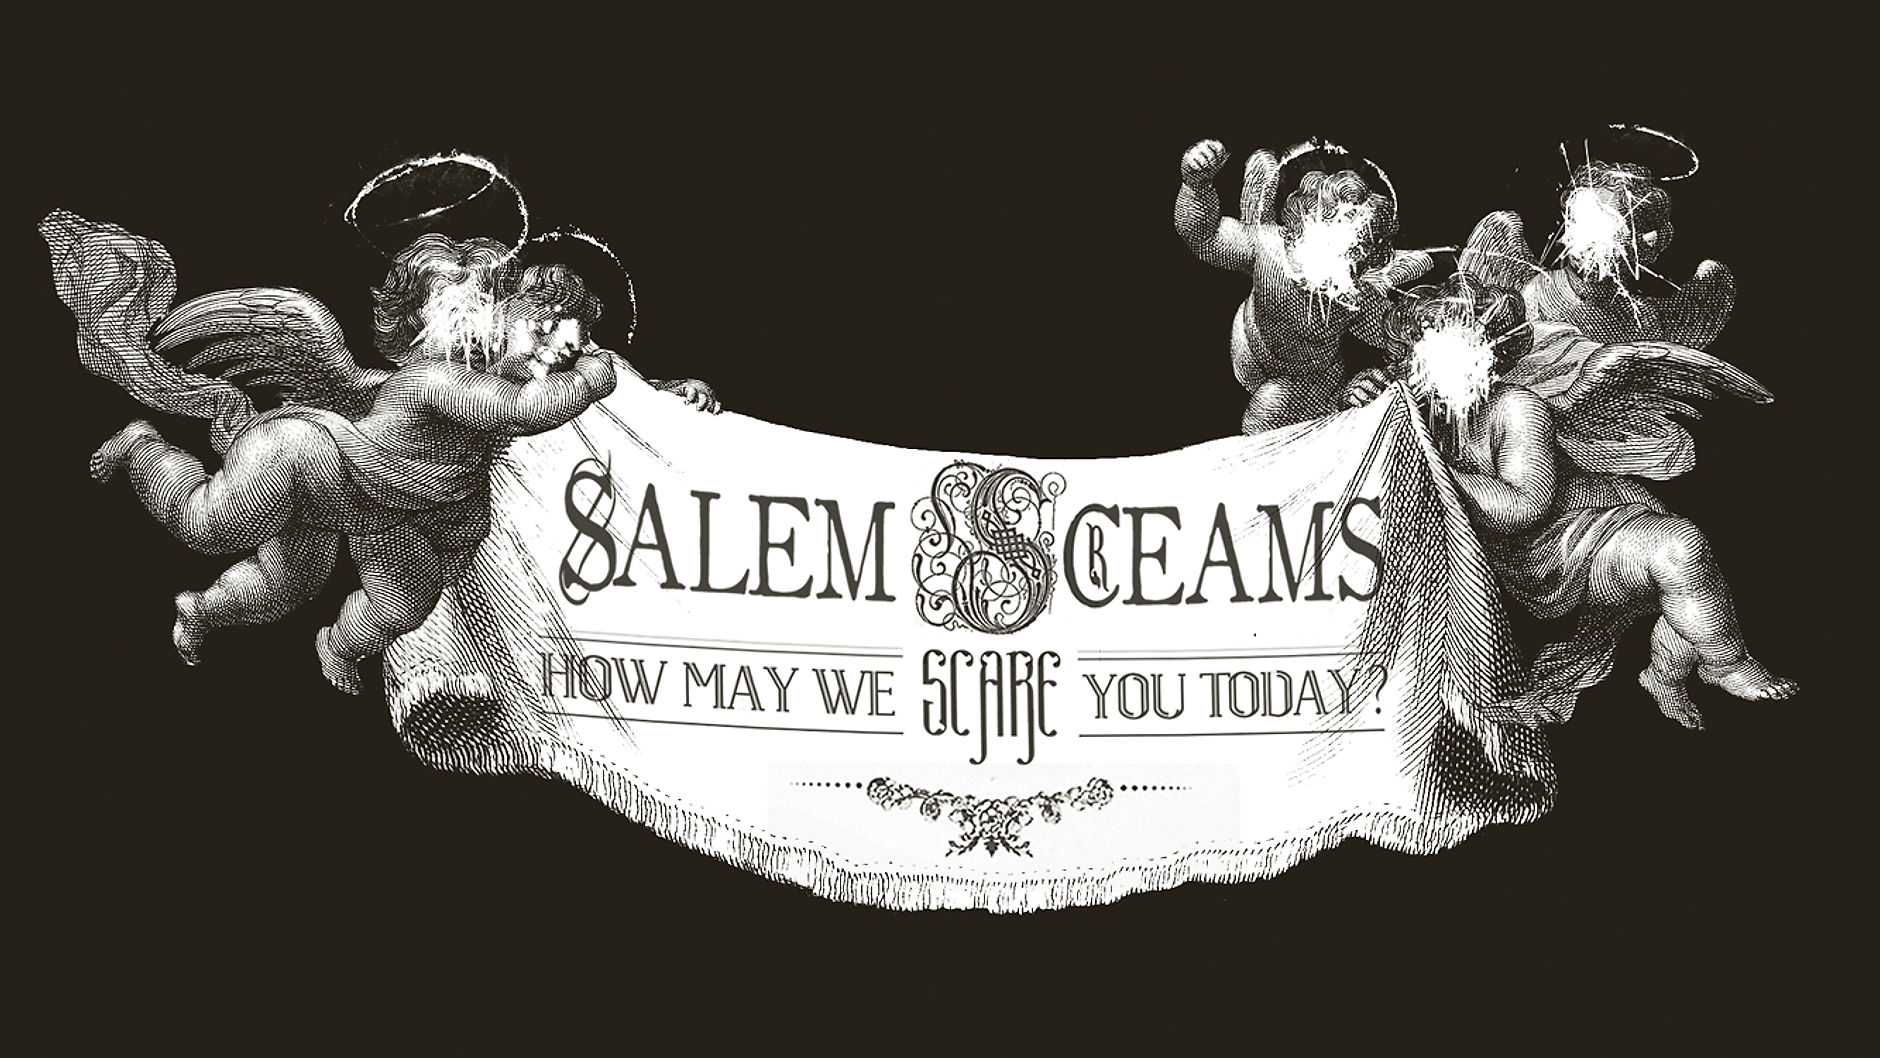 Salem Screams Video Library